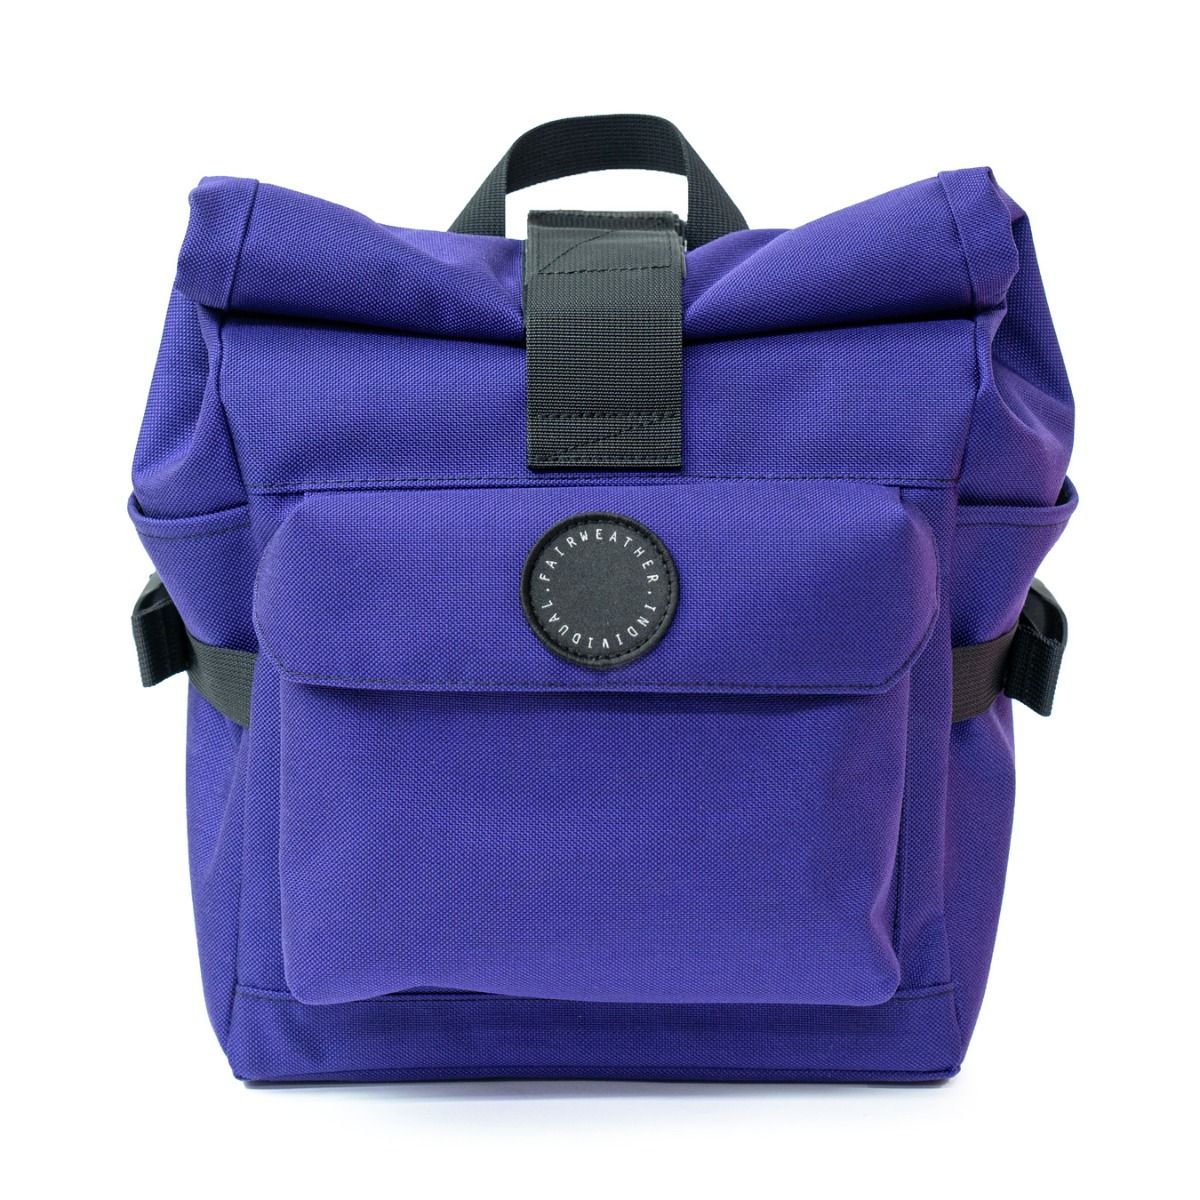 *FAIRWEATHER* multi bike bag (purple)